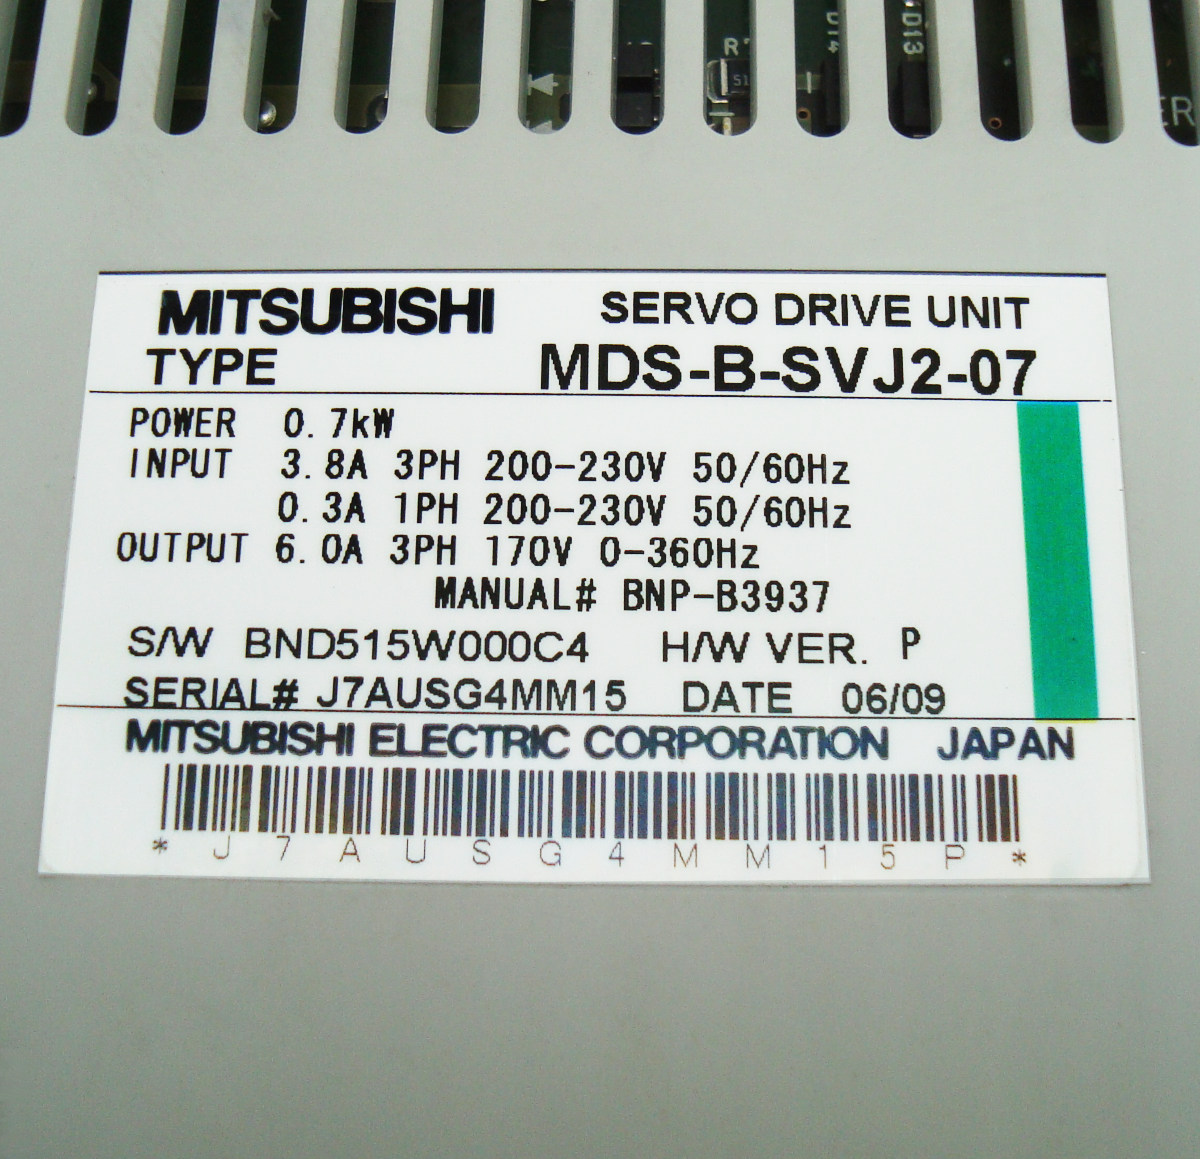 4 Exchange Mitsubishi Mds-b-svj2-07 Servo Drive Unit